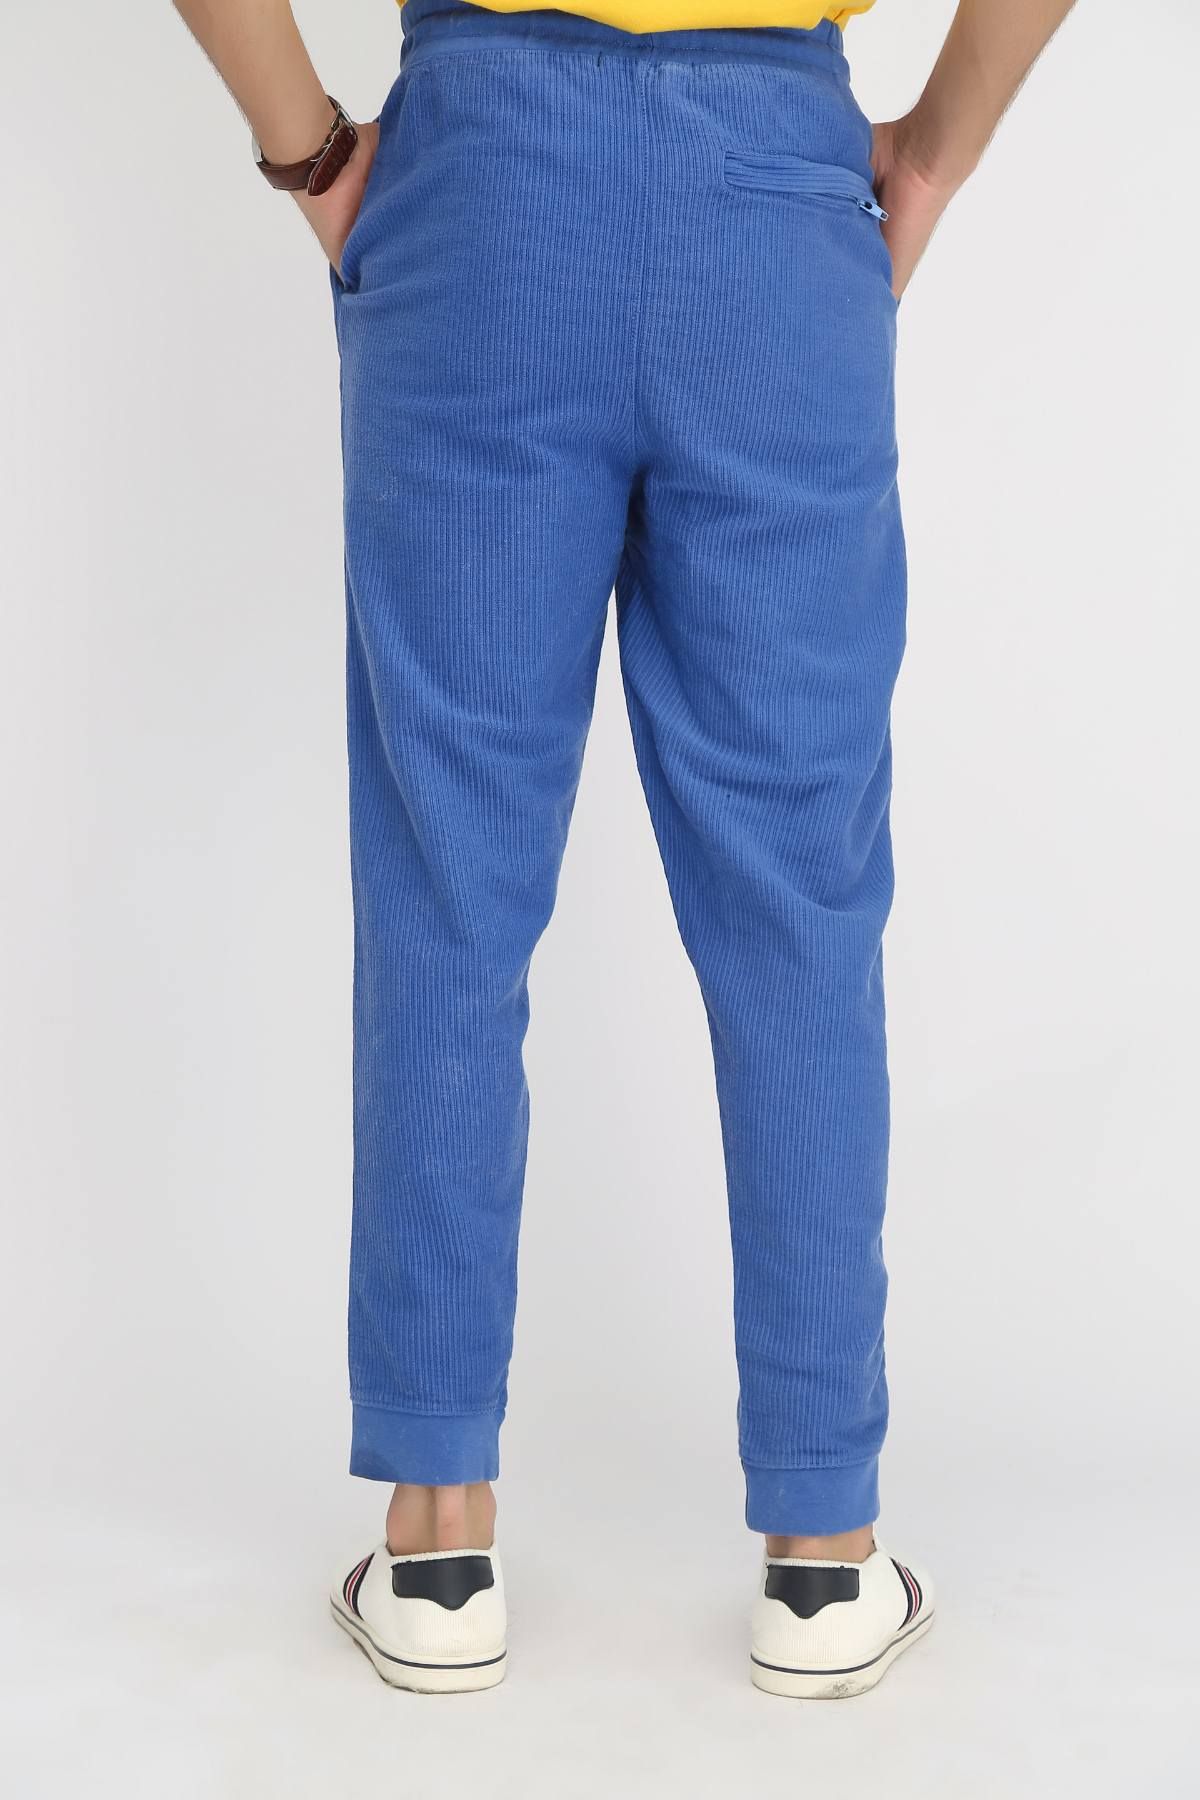 BRACKETS Knitted Trousers- Blue Blue Men Trousers